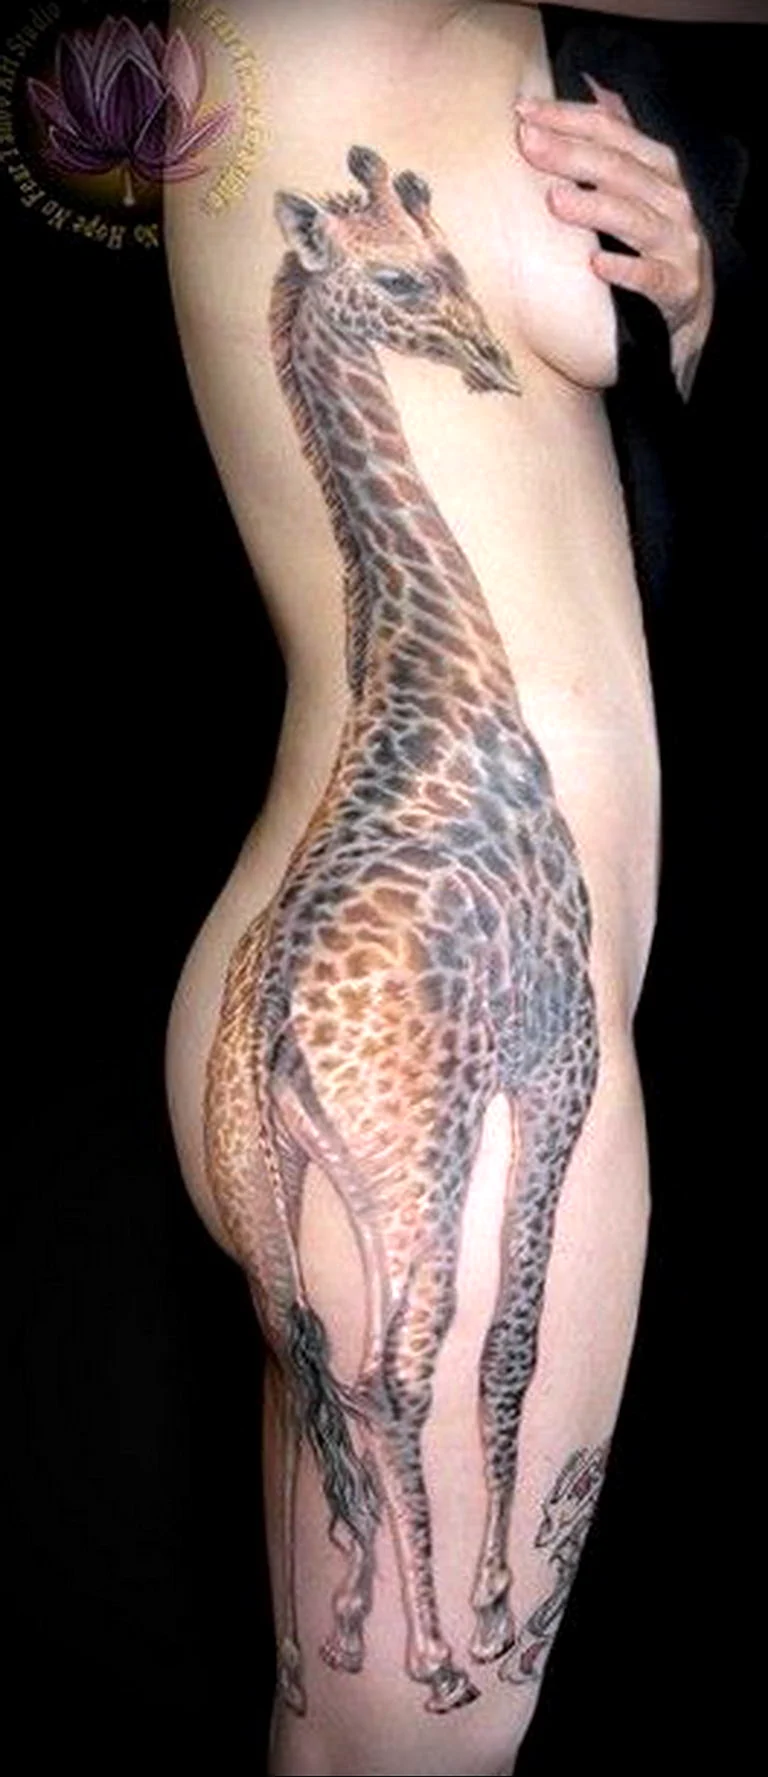 Giraffe and Tree Tattoo